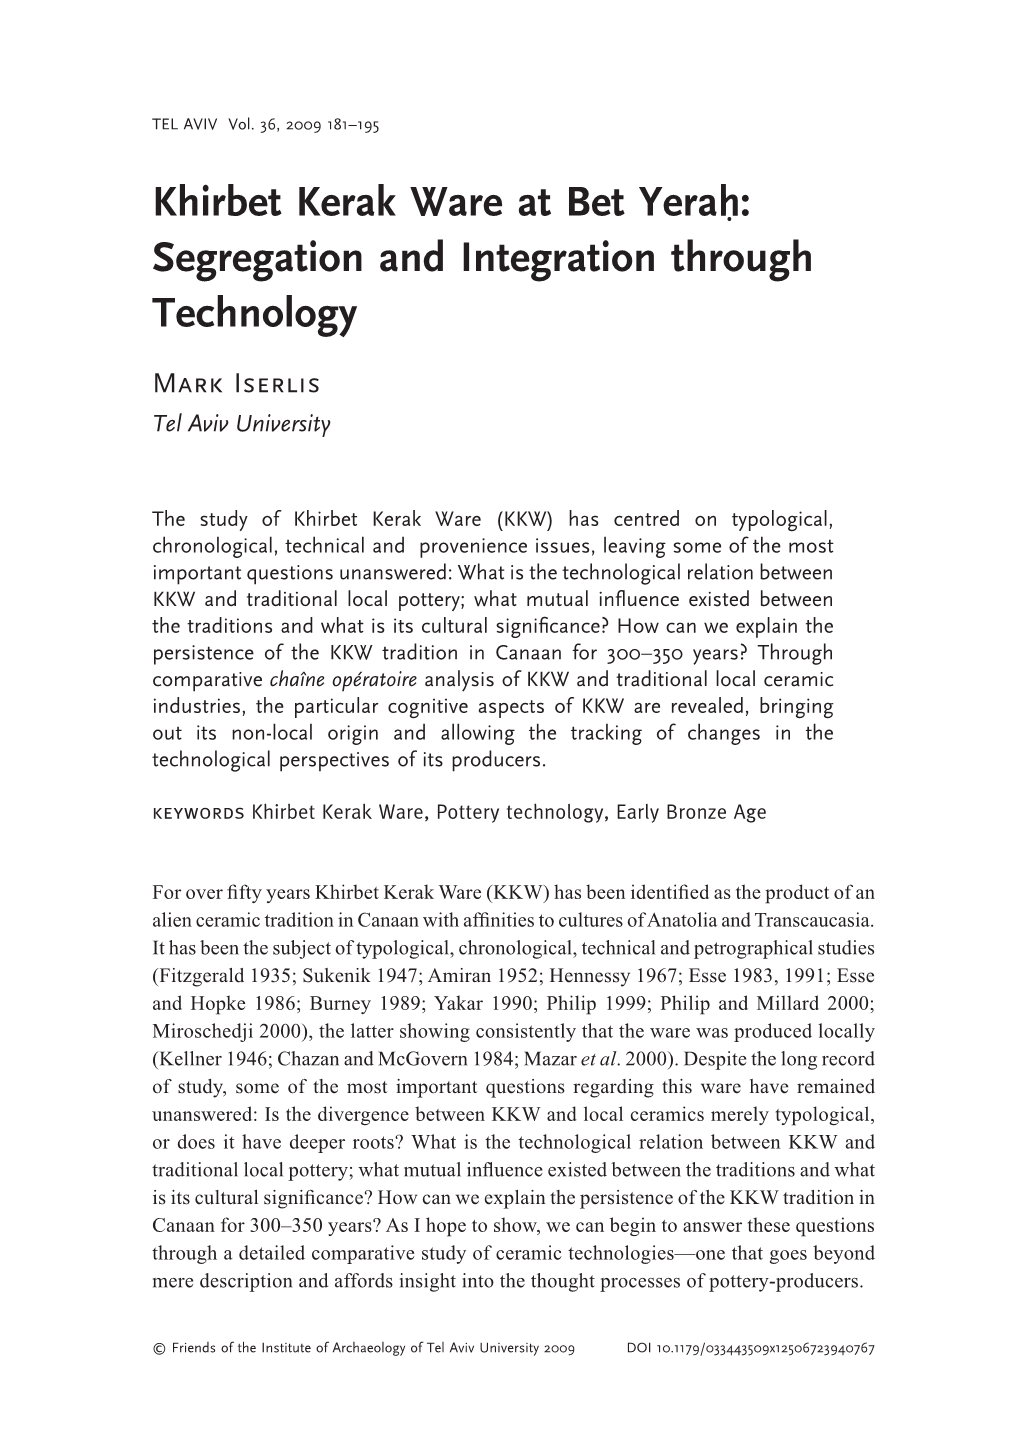 Khirbet Kerak Ware at Bet Yera : Segregation and Integration Through Technology